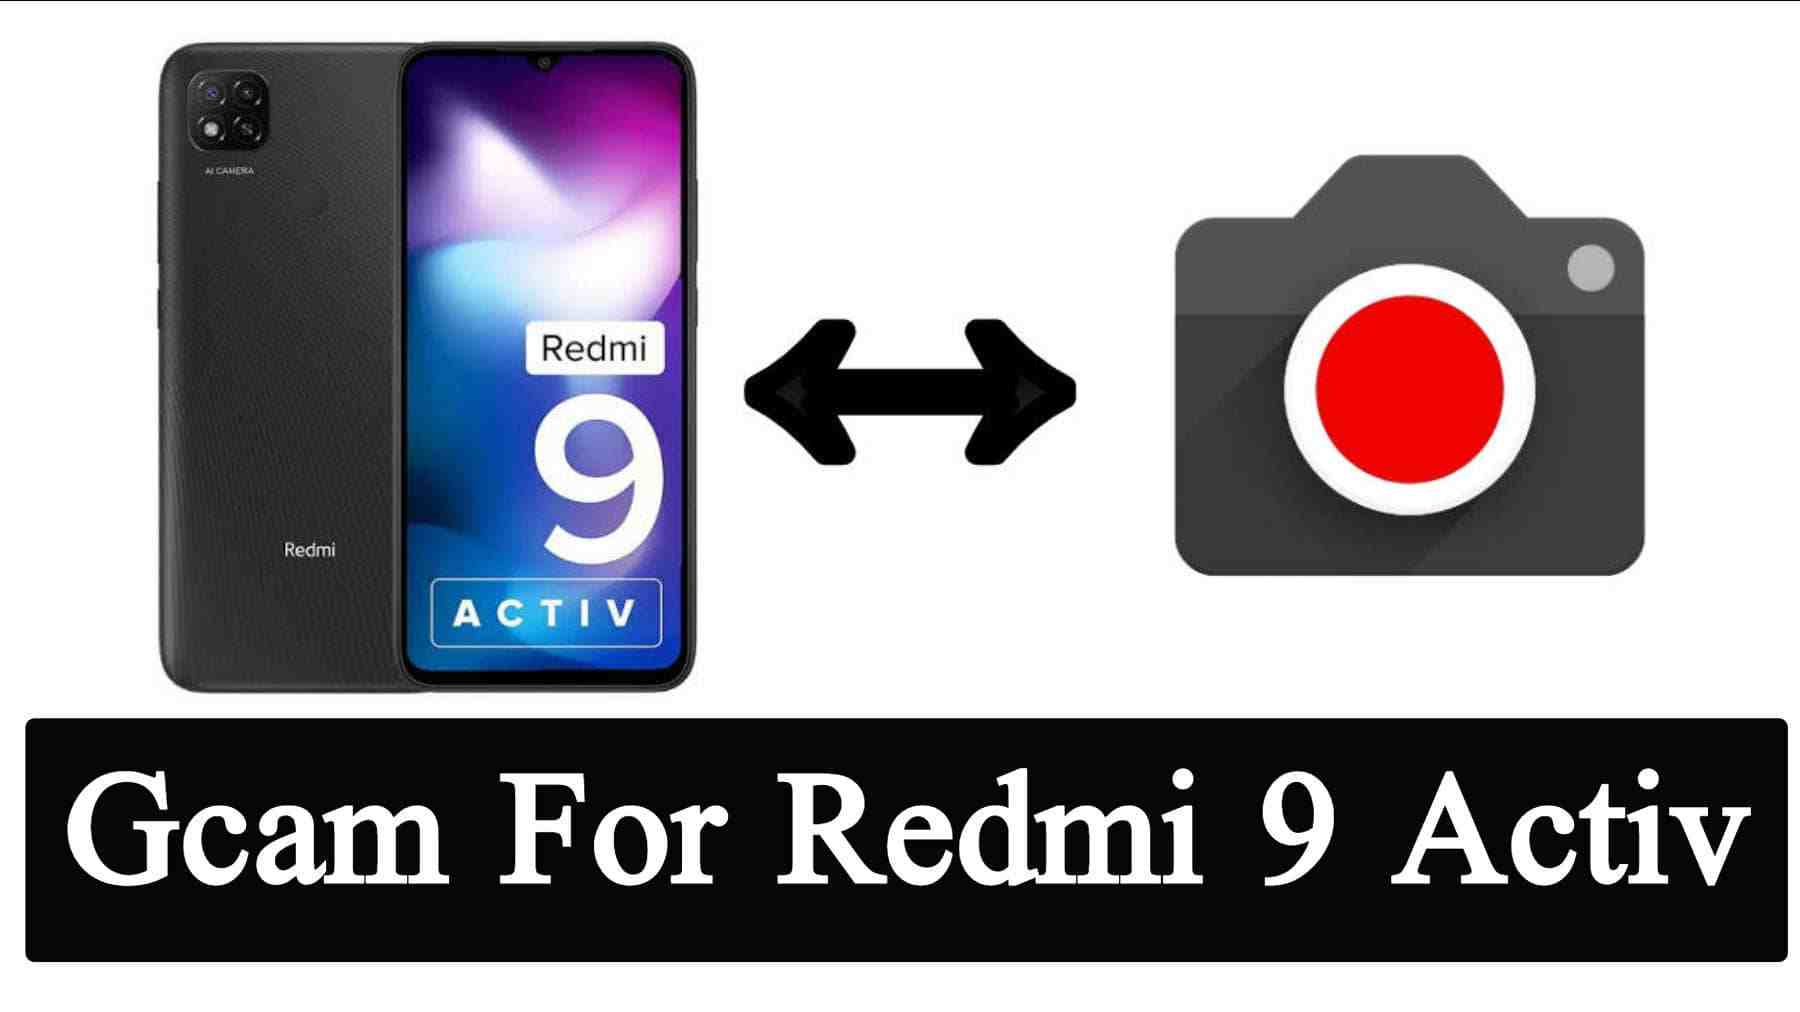 Download GCam for Redmi 9 Activ